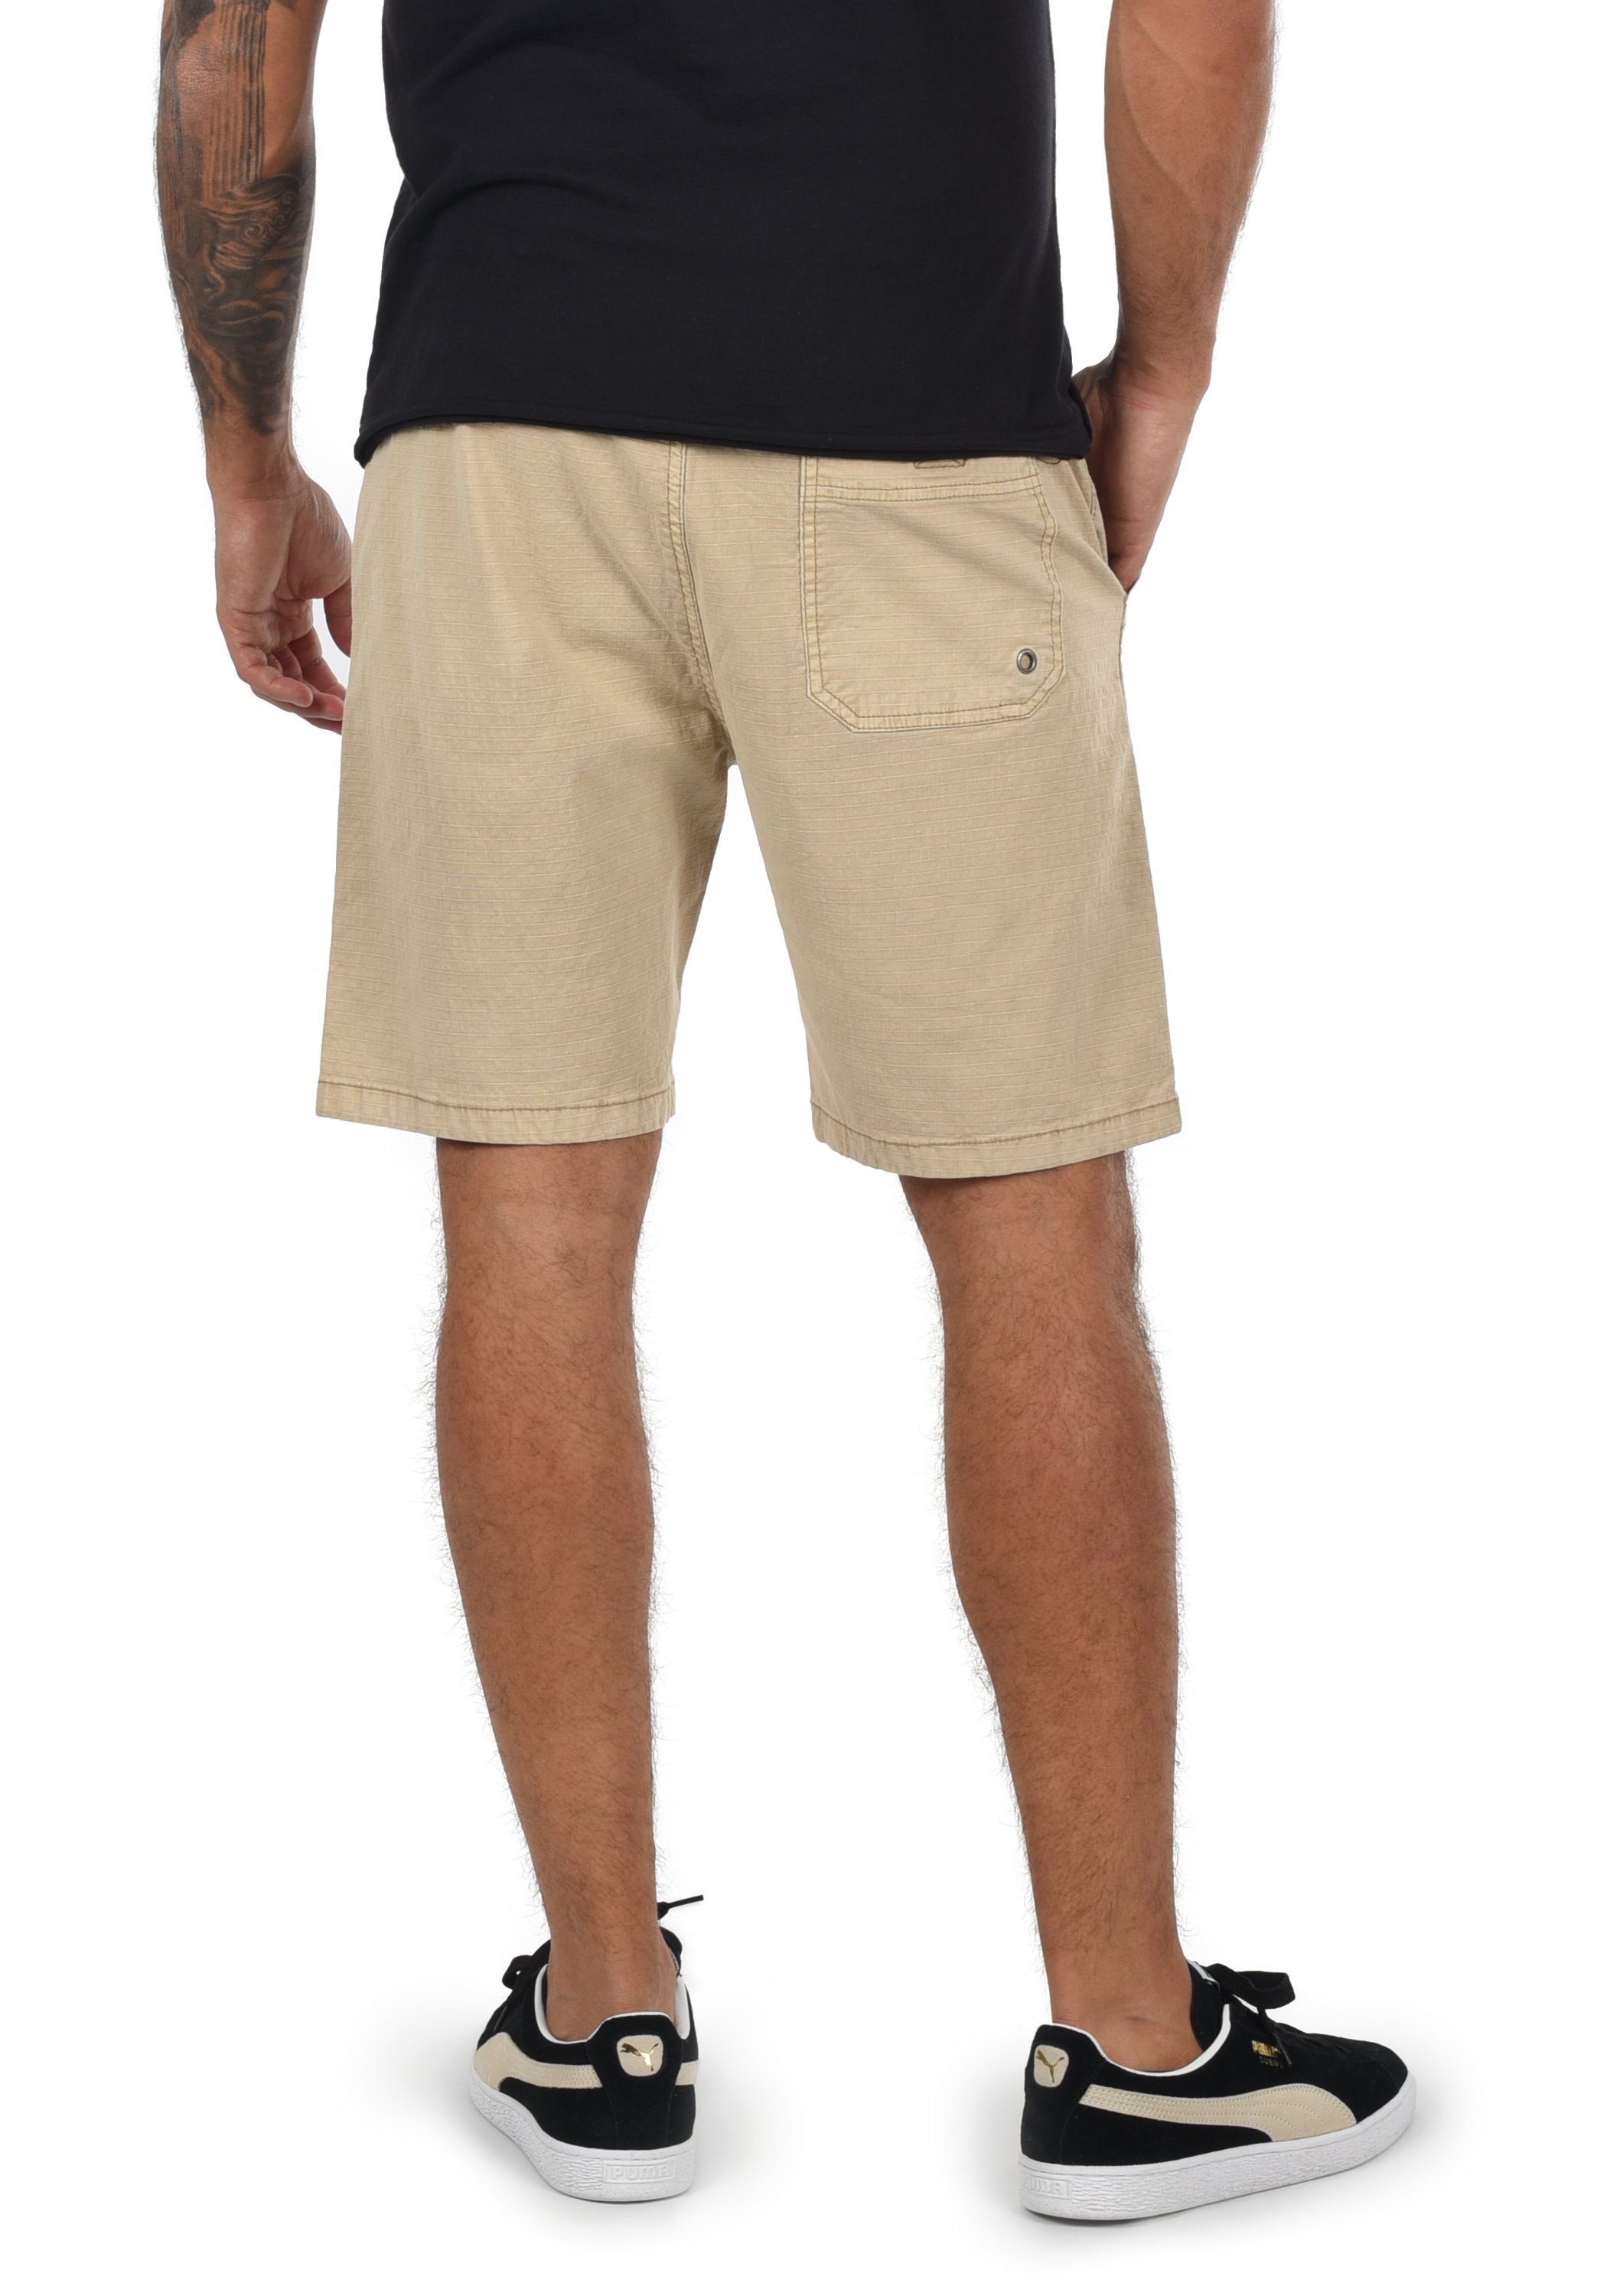 White IDFrancesco mit Bund kurze elastischem Shorts Hose Pepper Indicode